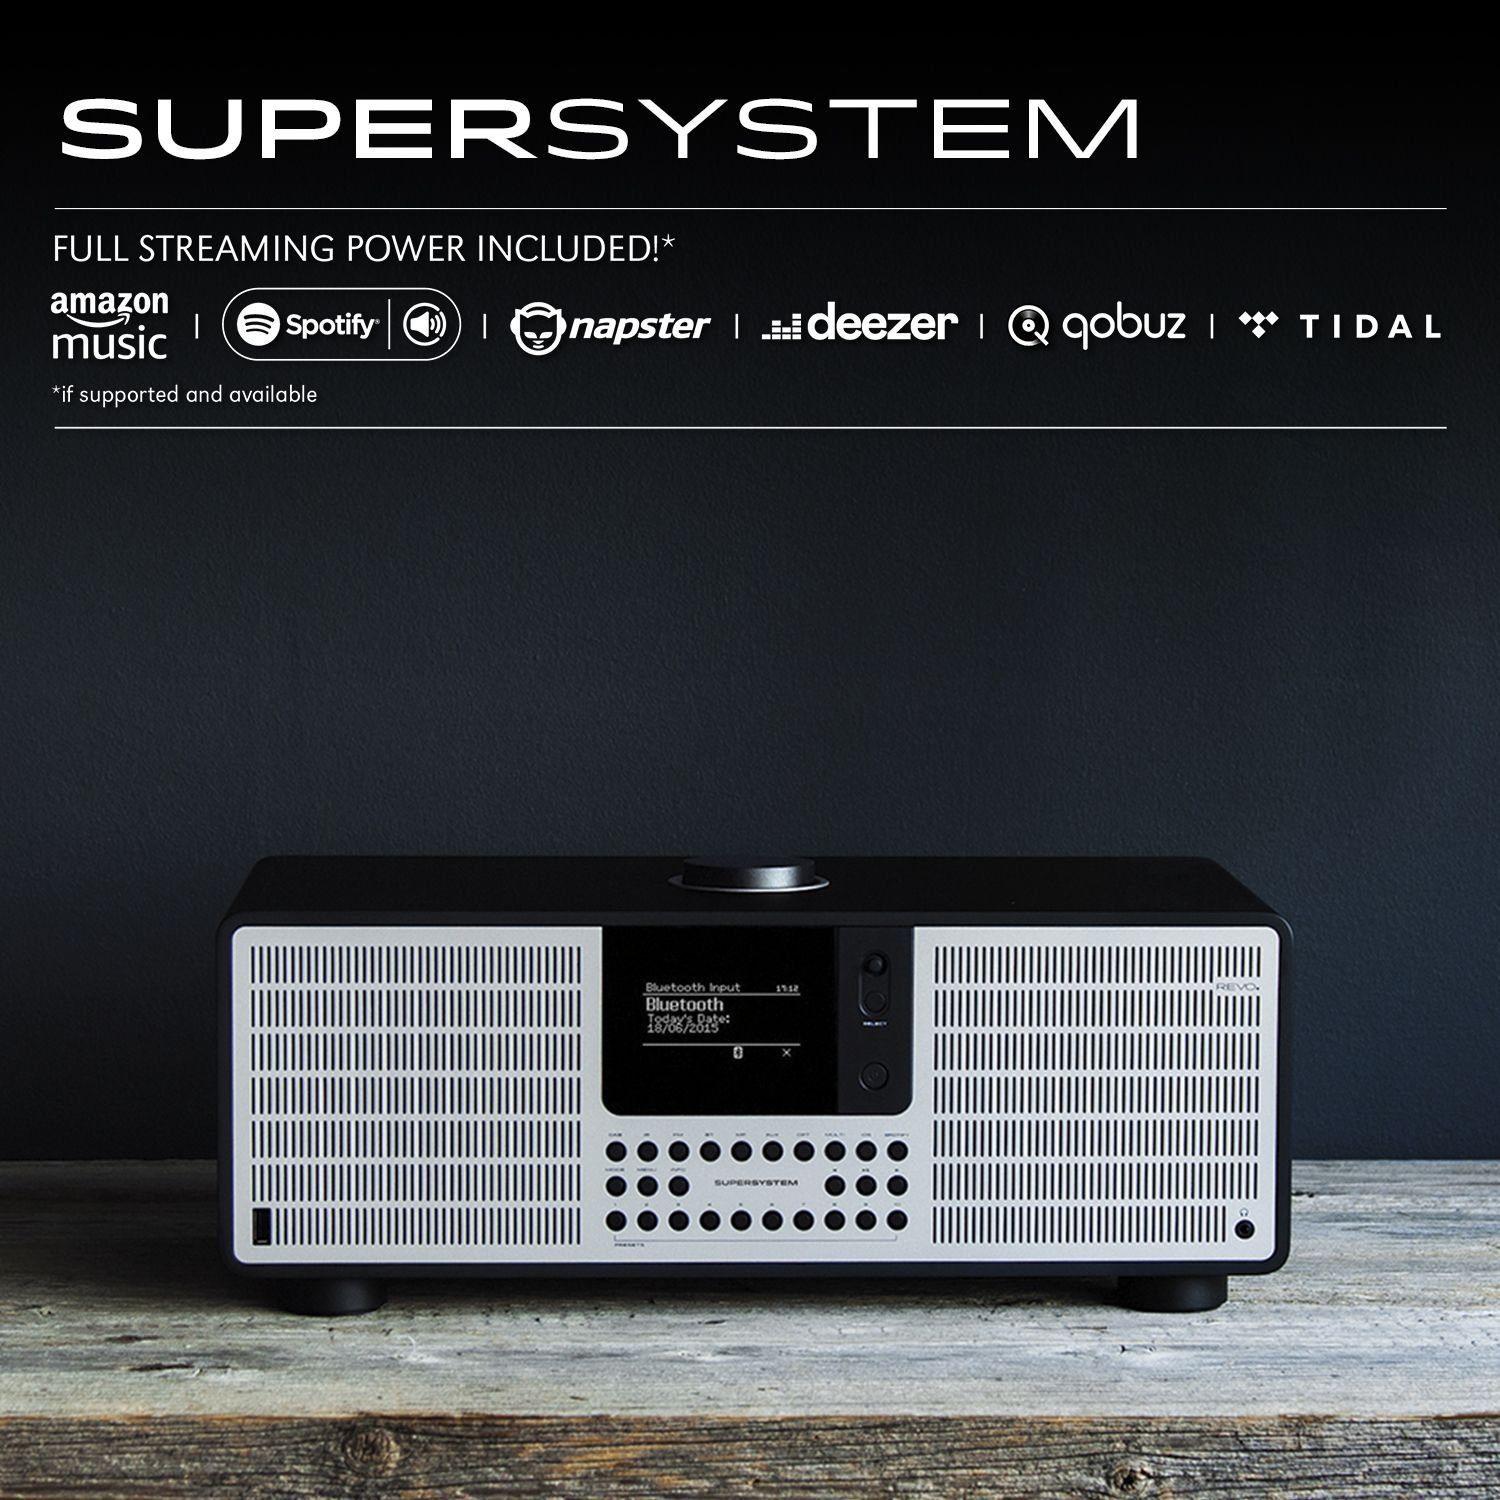 mattschwarz/silber Spotify (DAB) connect WLAN Stereoradio SuperSystem Revo Digitalradio LAN Internet-/DAB+